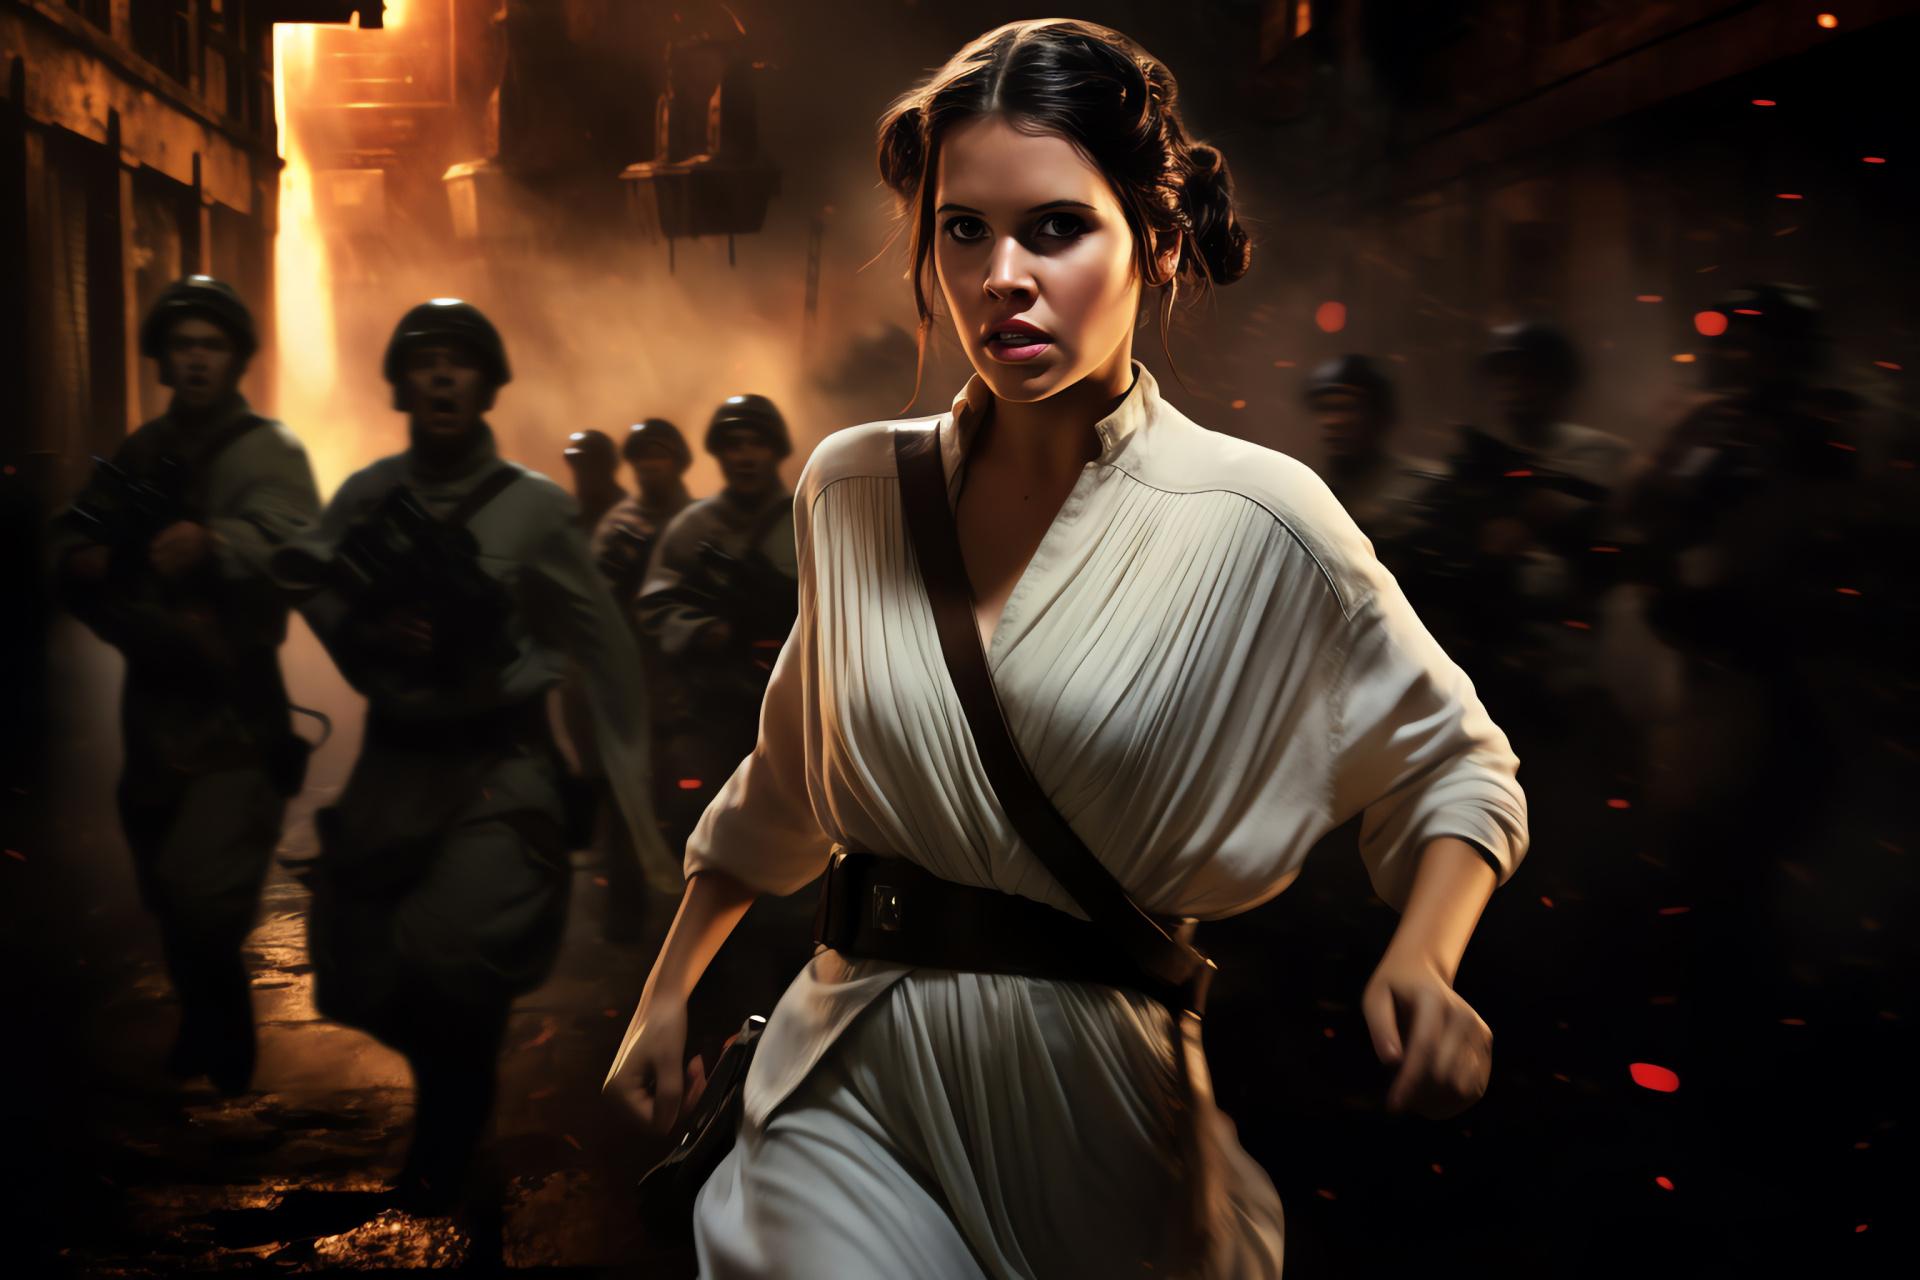 Princess Leia in action, role model, Rebel Alliance action, heroic cinema figure, dynamic film moment, HD Desktop Image